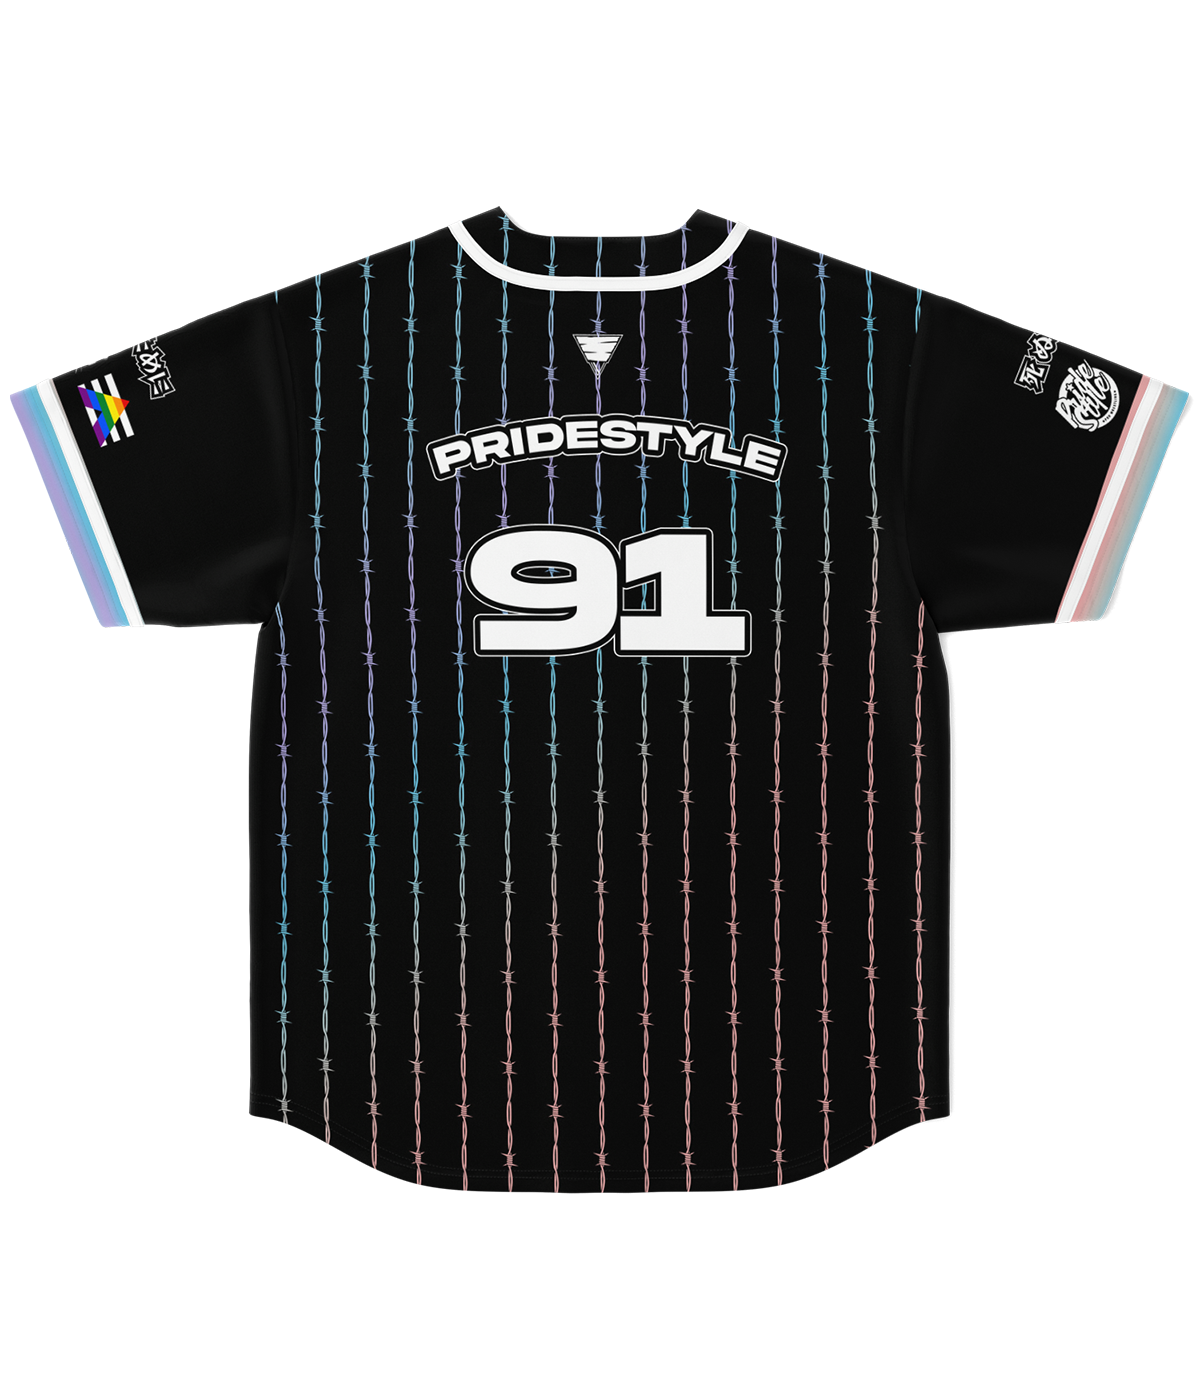 PrideStyle Baseball Jersey - Rainbow : Stiff Blade Apparel Co. 4XL